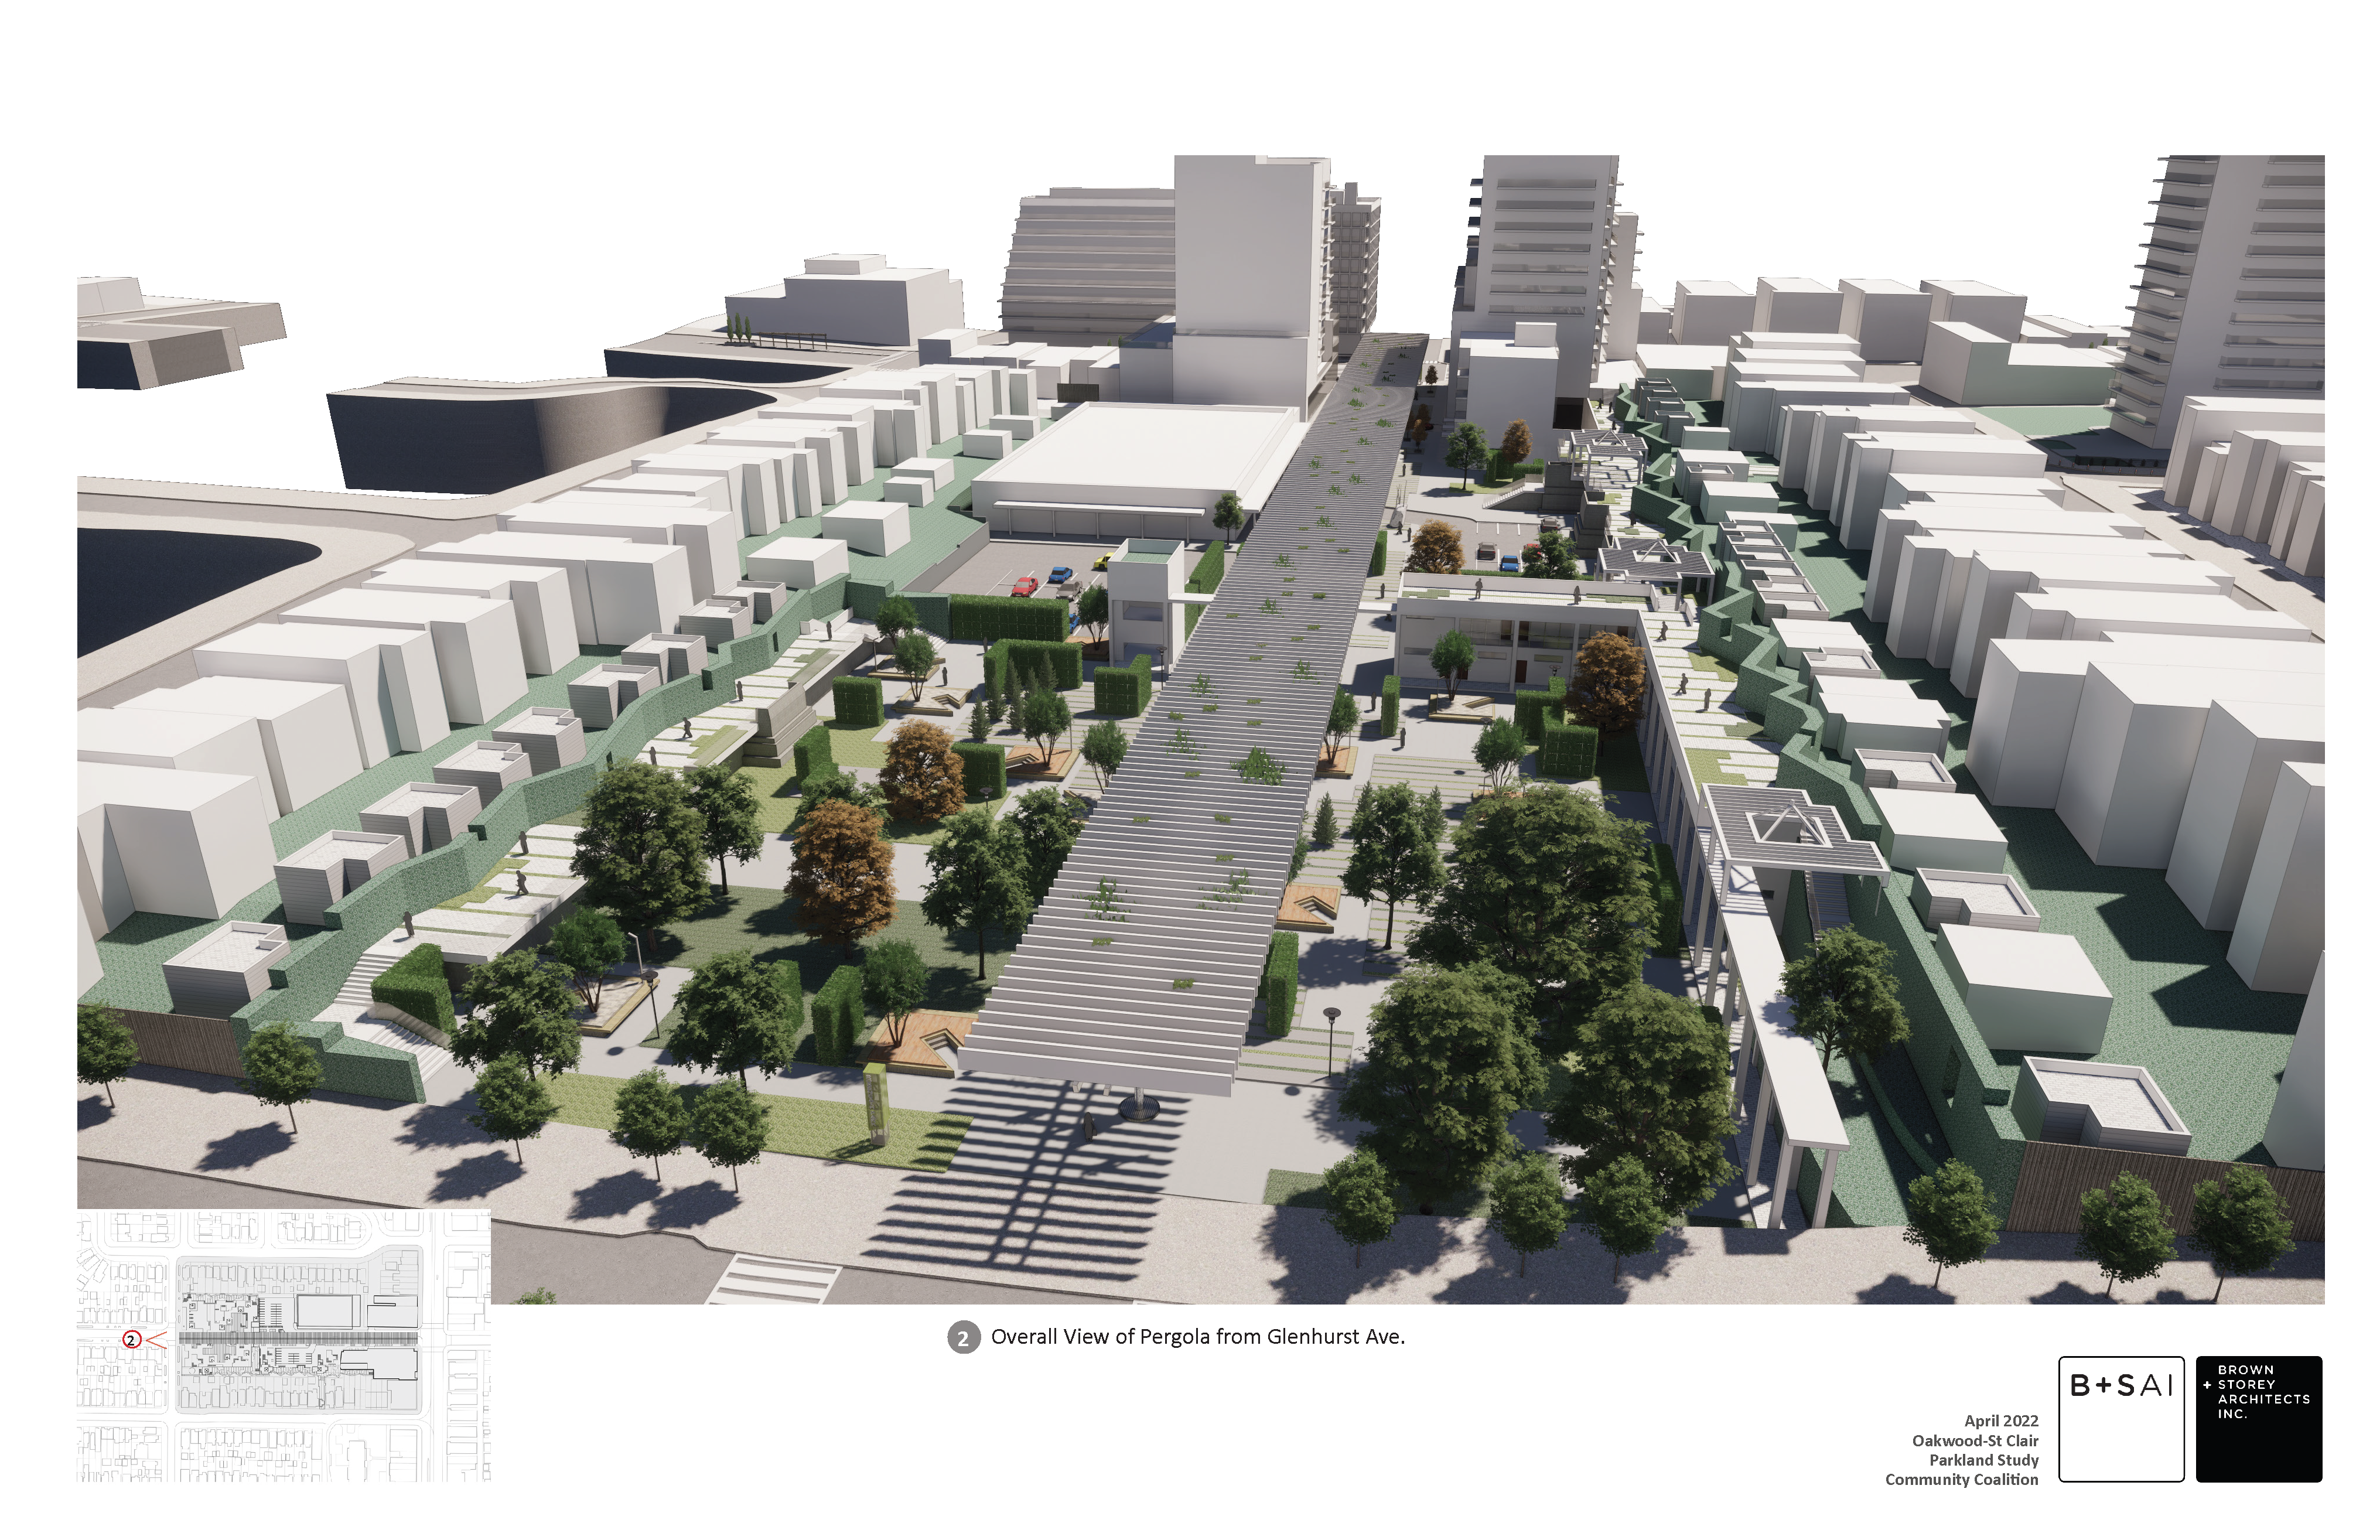 Oakwood-St. Clair Parkland Study: Roseneath Park Expansion and Improvements